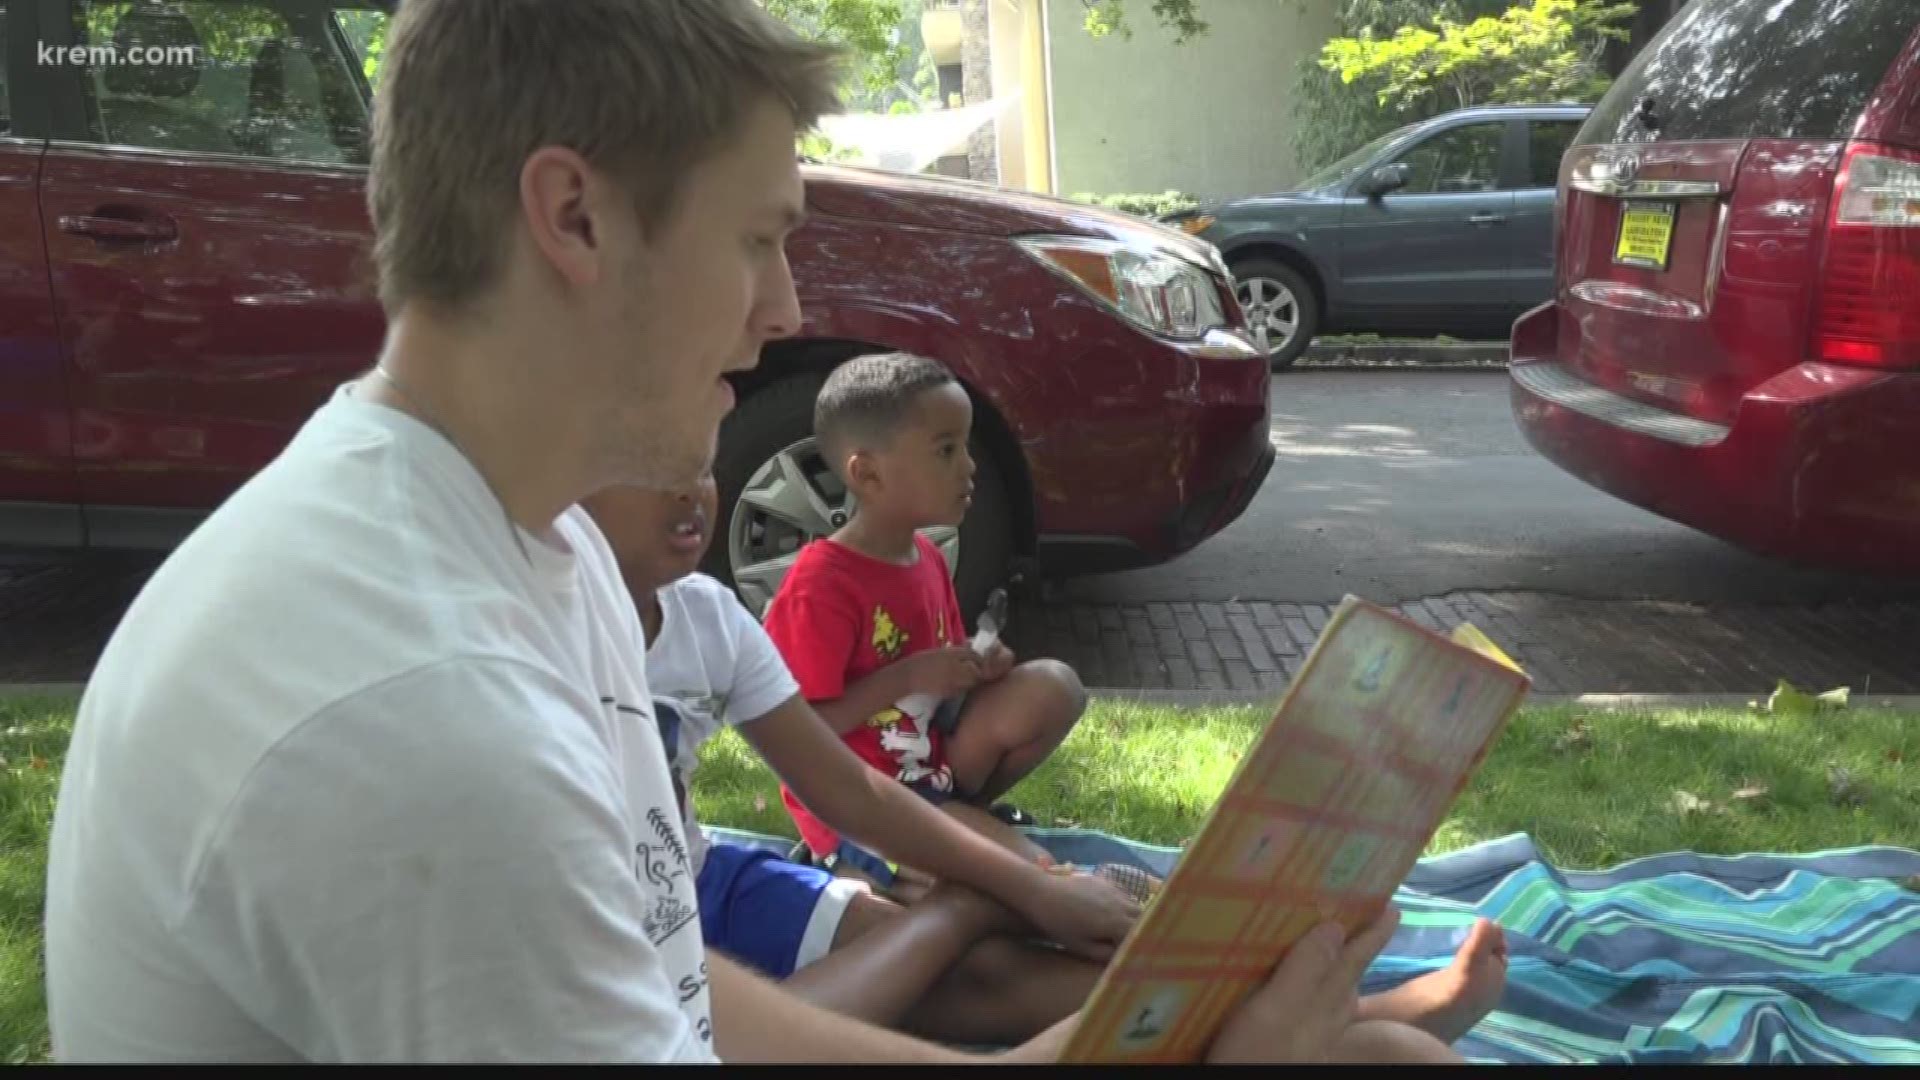 Spokane volunteers teach refugee children how to read, write in English